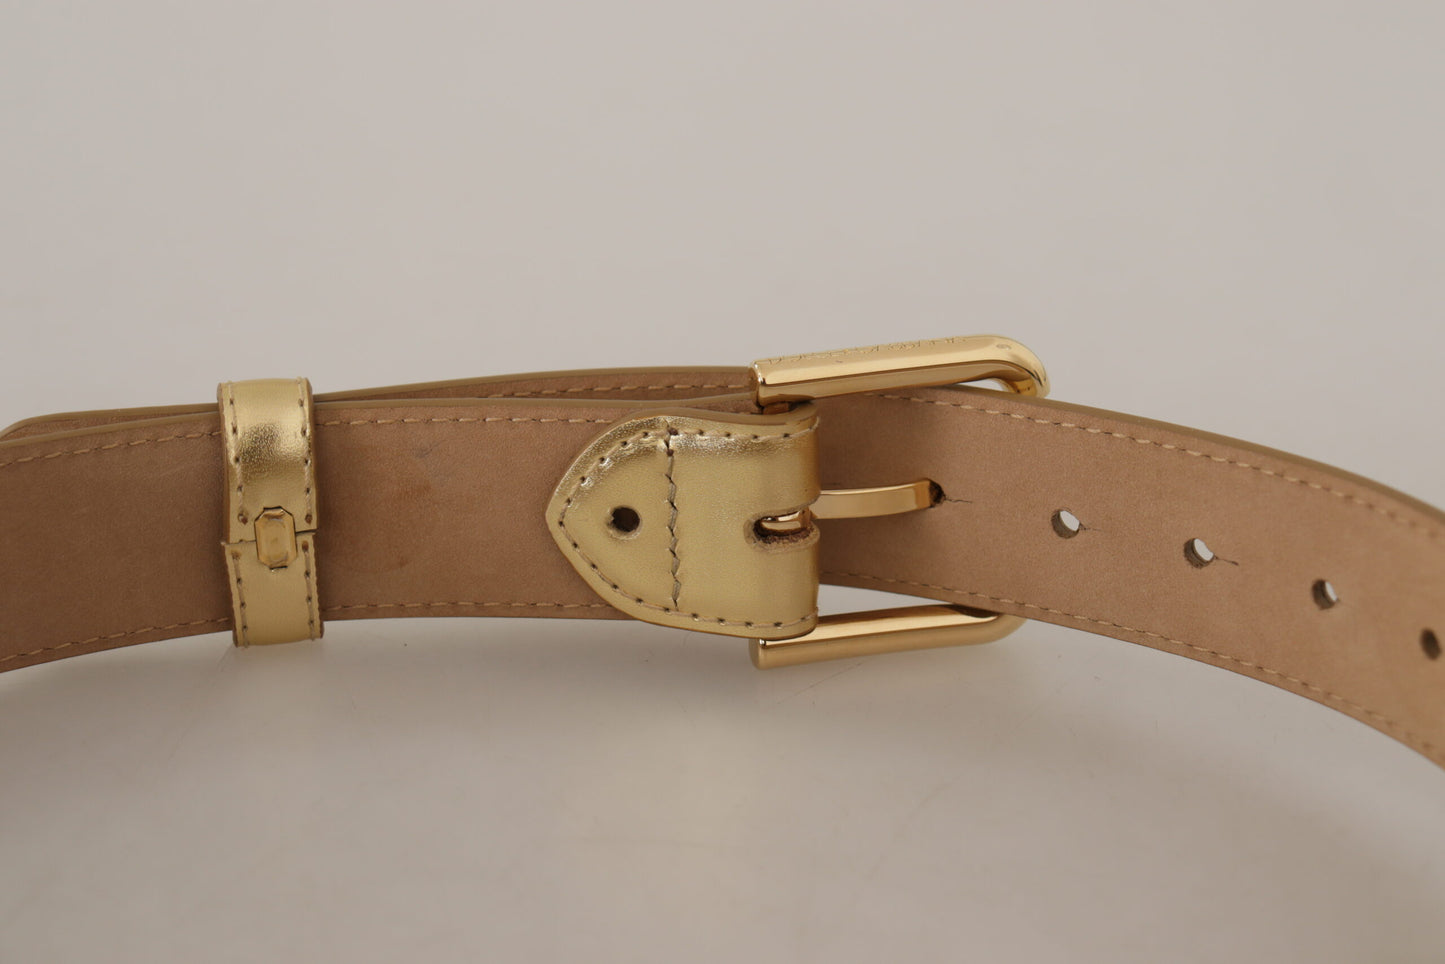 Elegant Gold Leather Belt with Logo Buckle